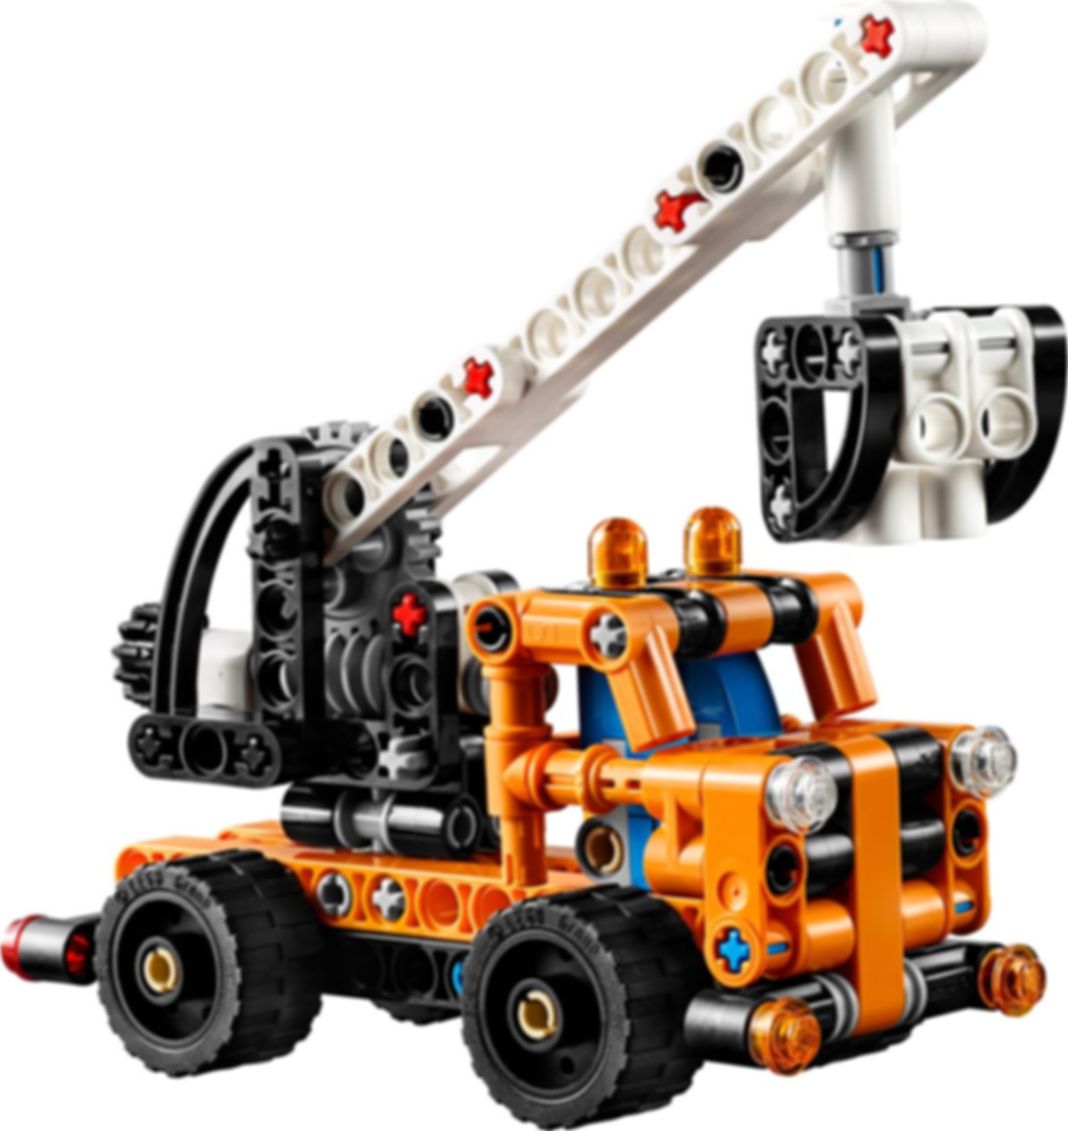 LEGO® Technic Cherry Picker components